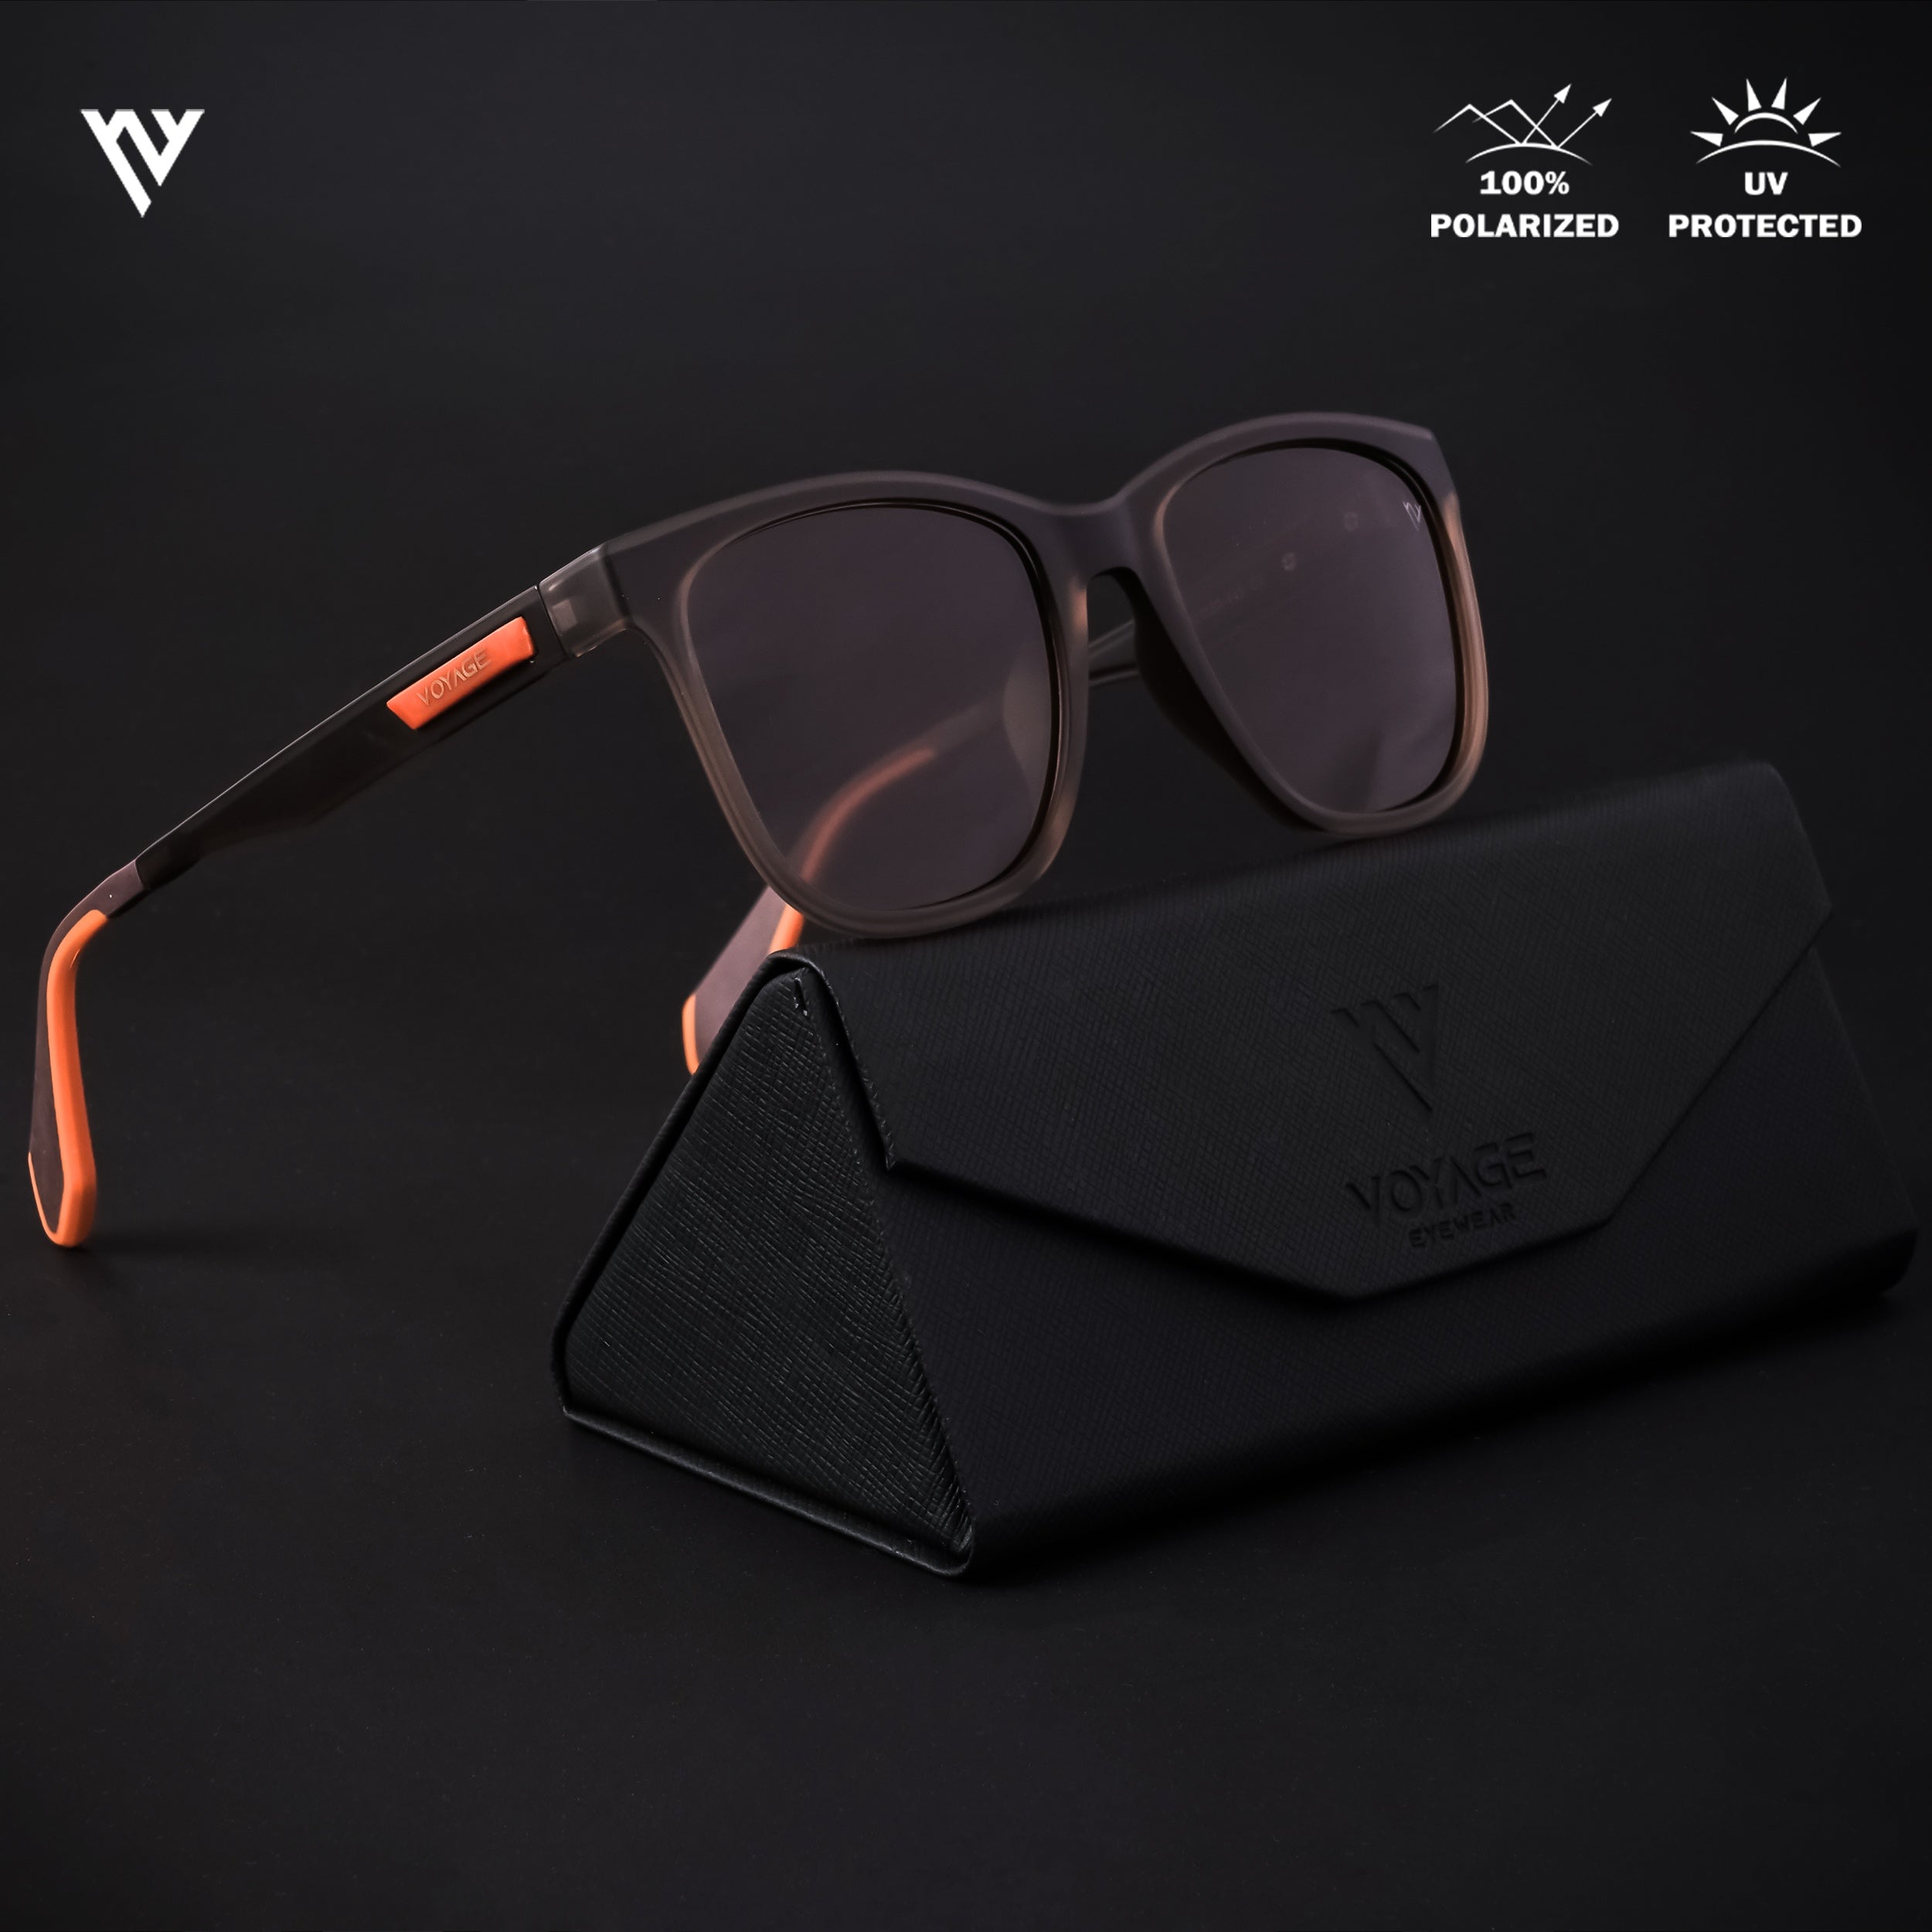 Voyage Active Brown Polarized Wayfarer Sunglasses for Men & Women - PMG4466